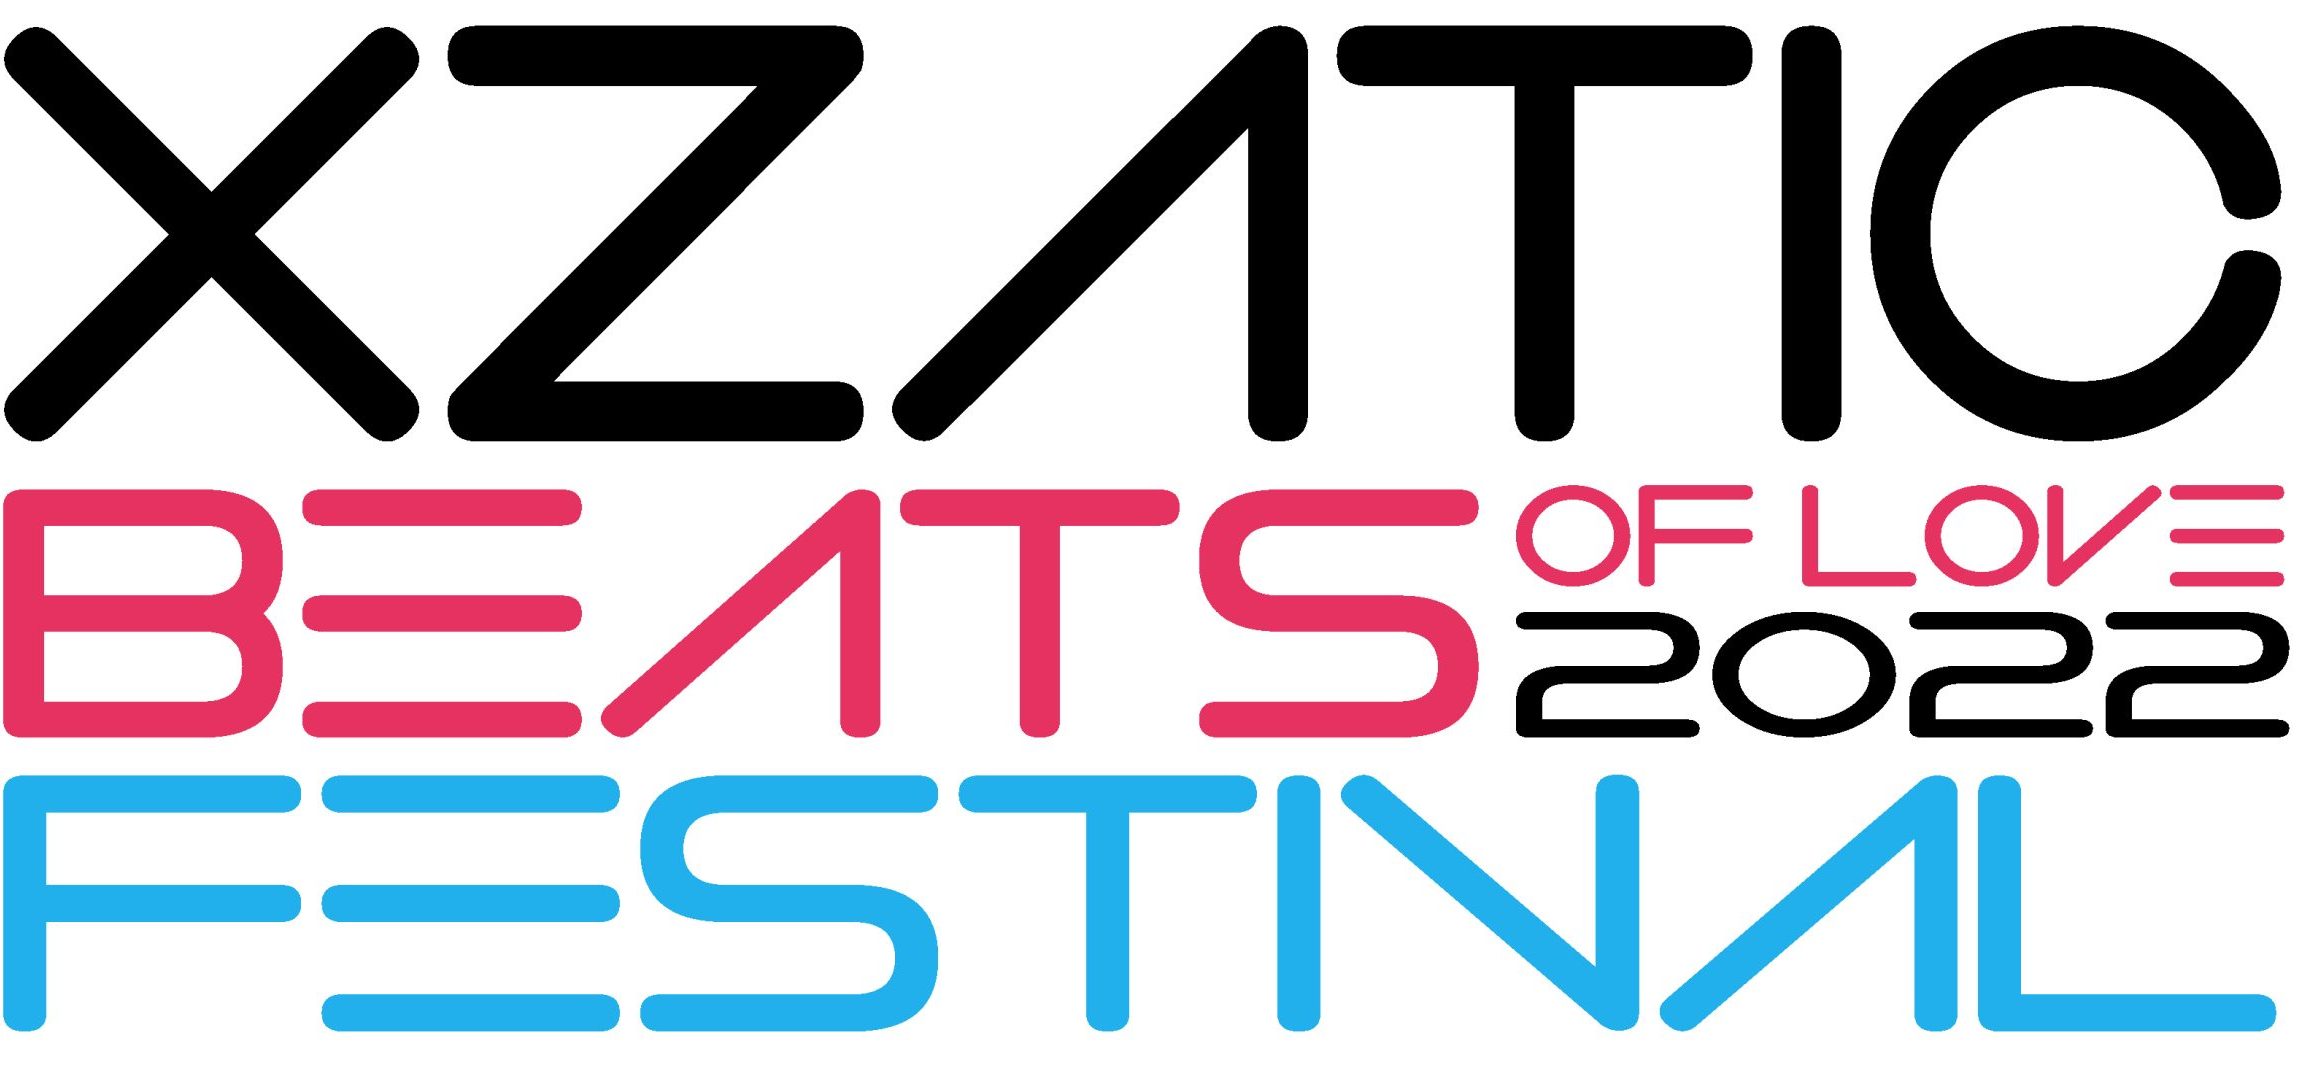 XZATIC.COM – EVENTS – BEATS OF LOVE FESTIVAL